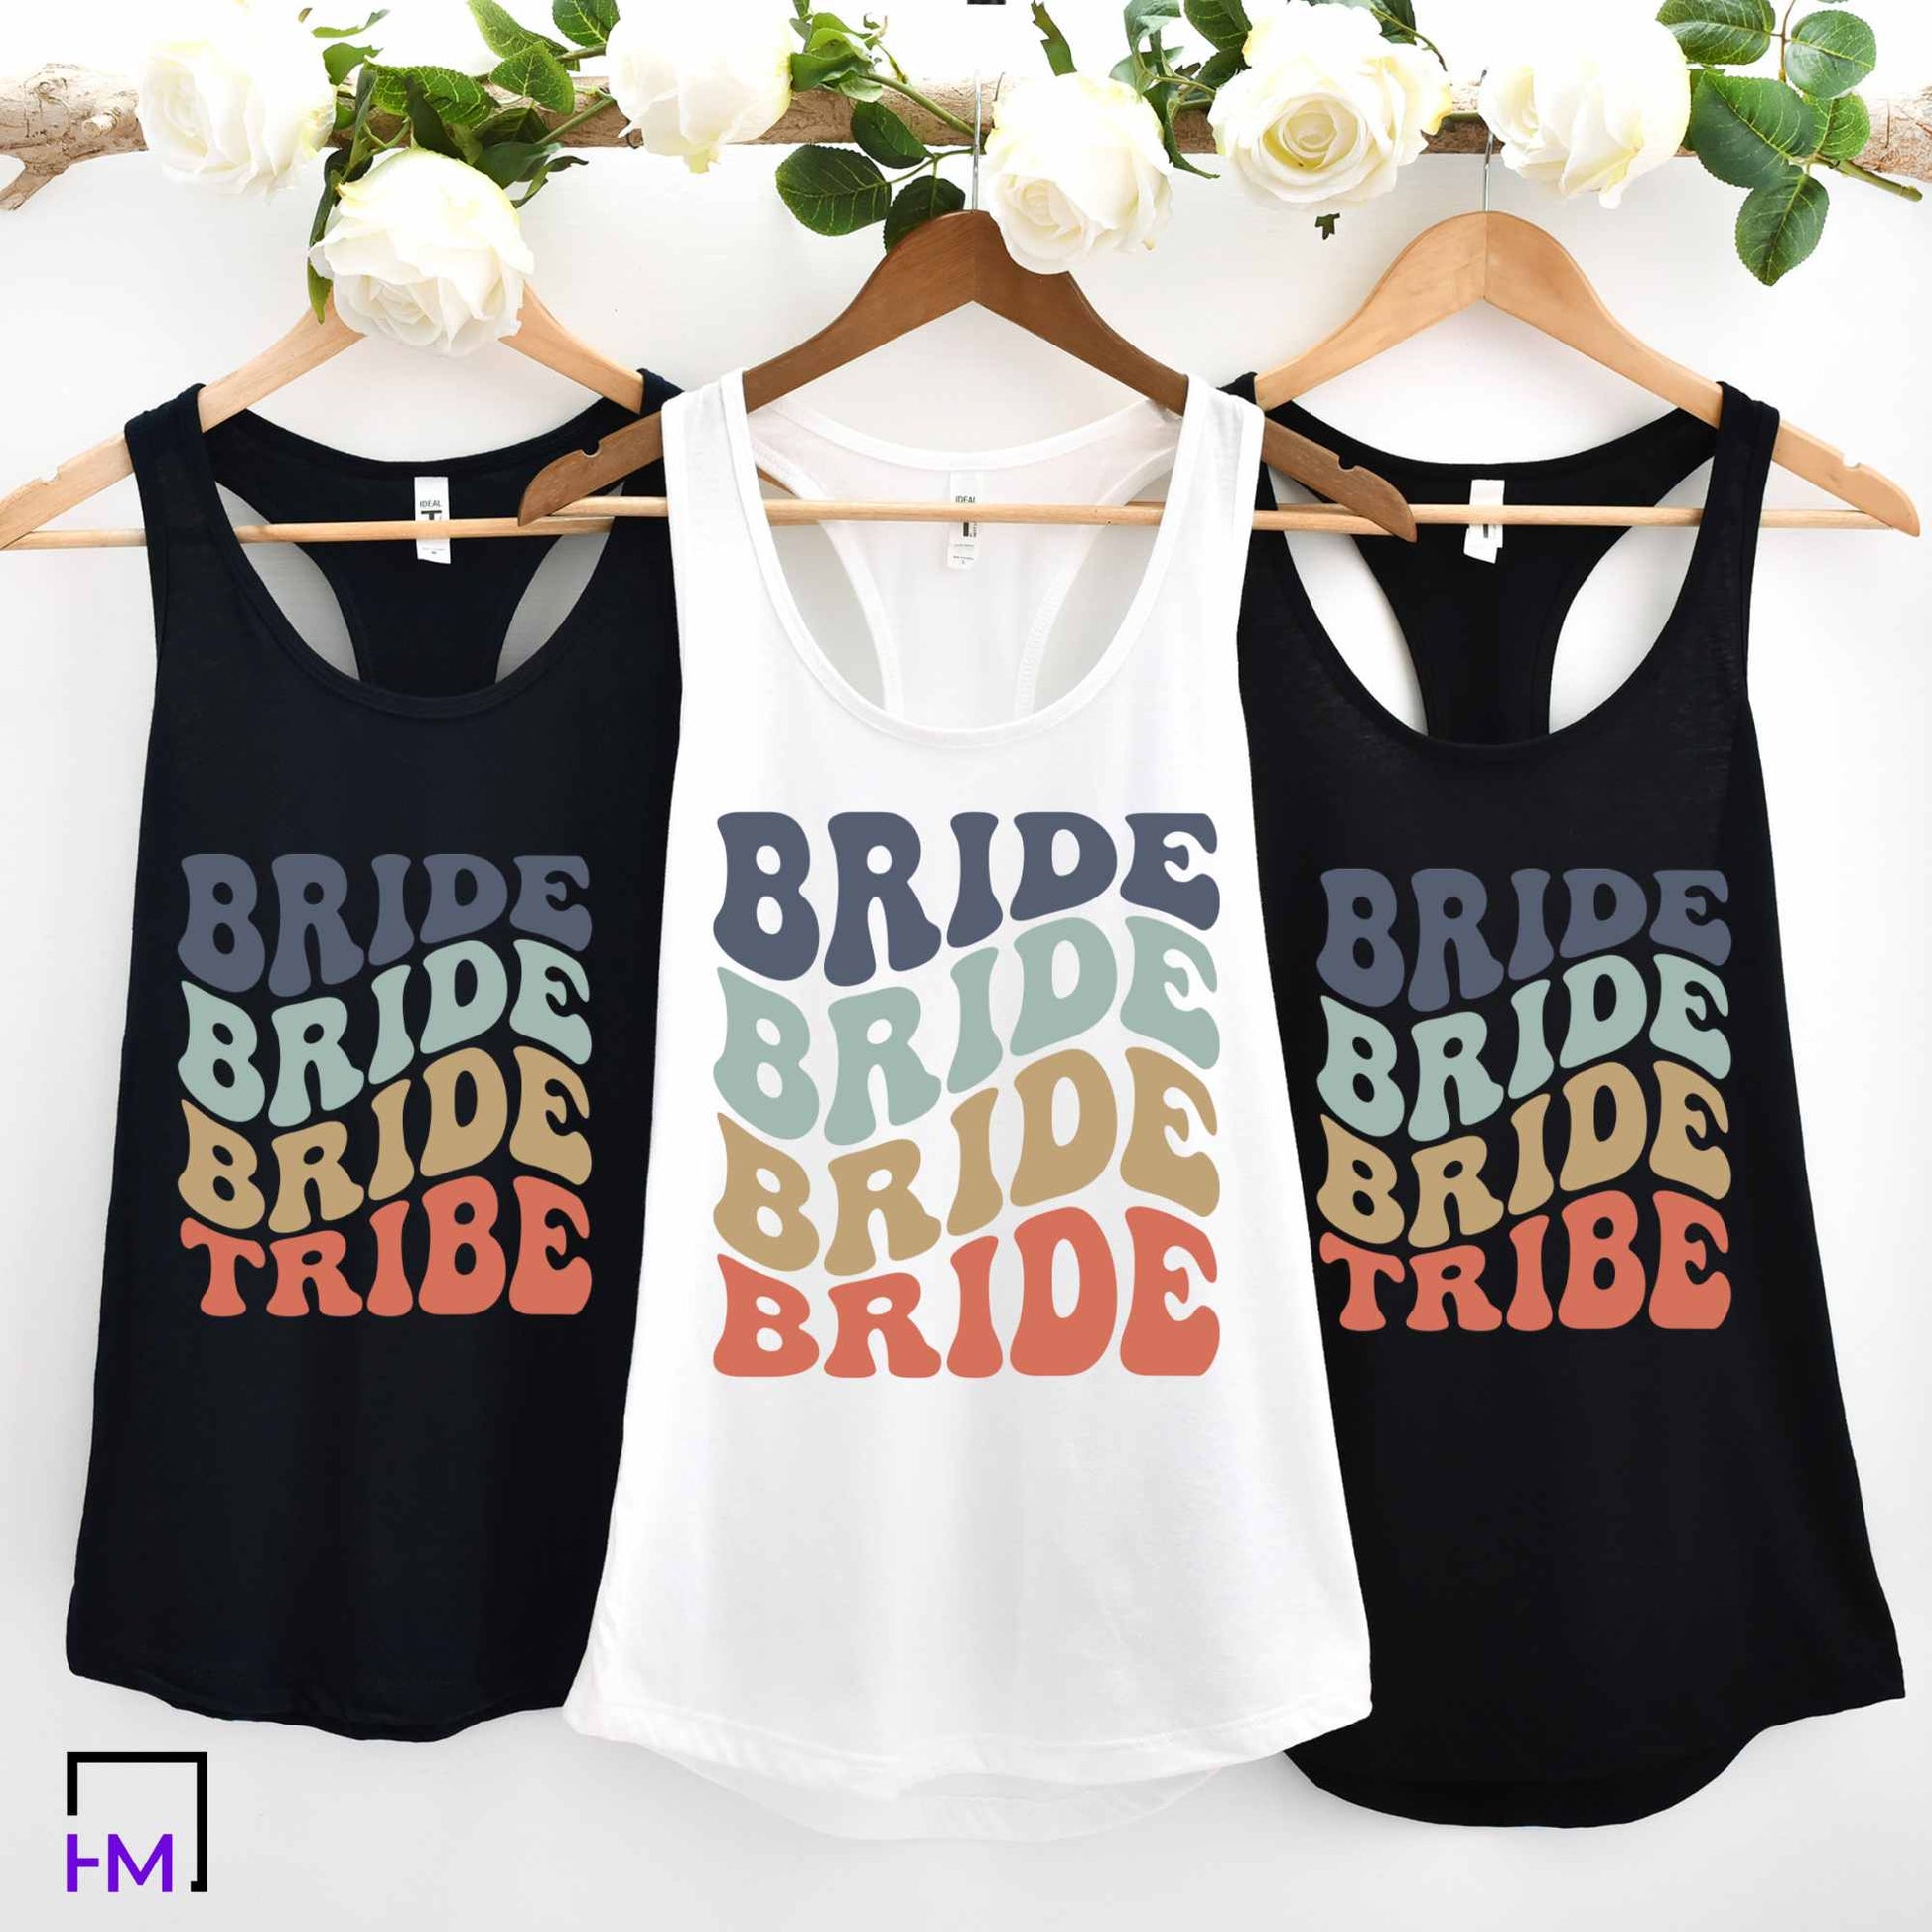 Bride & Bride Tribe Bachelorette Party Shirts, Retro 70s Themed Bachelorette Party Shirts